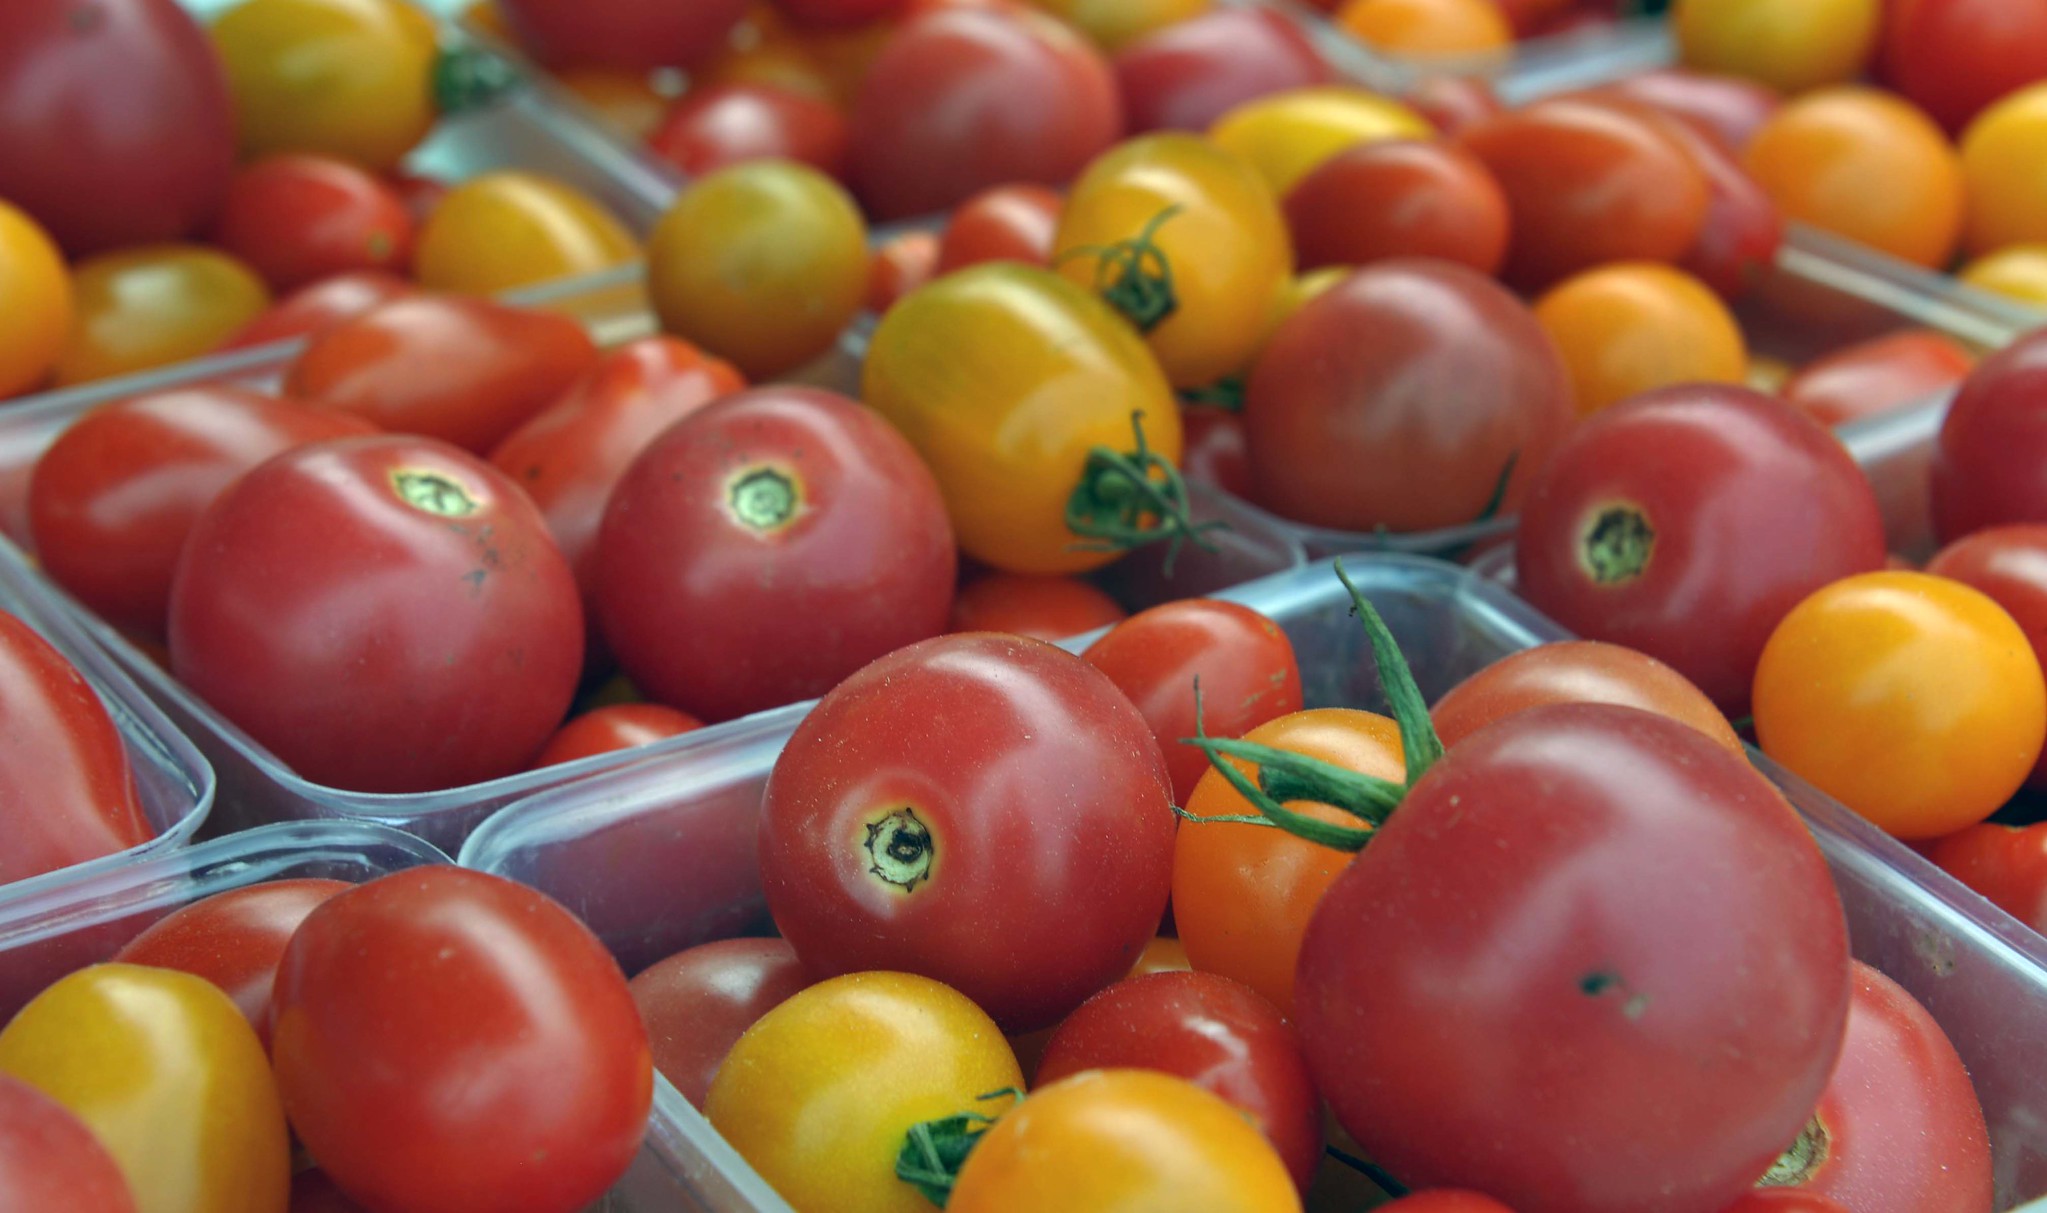 Tomatoes in plastic bins.